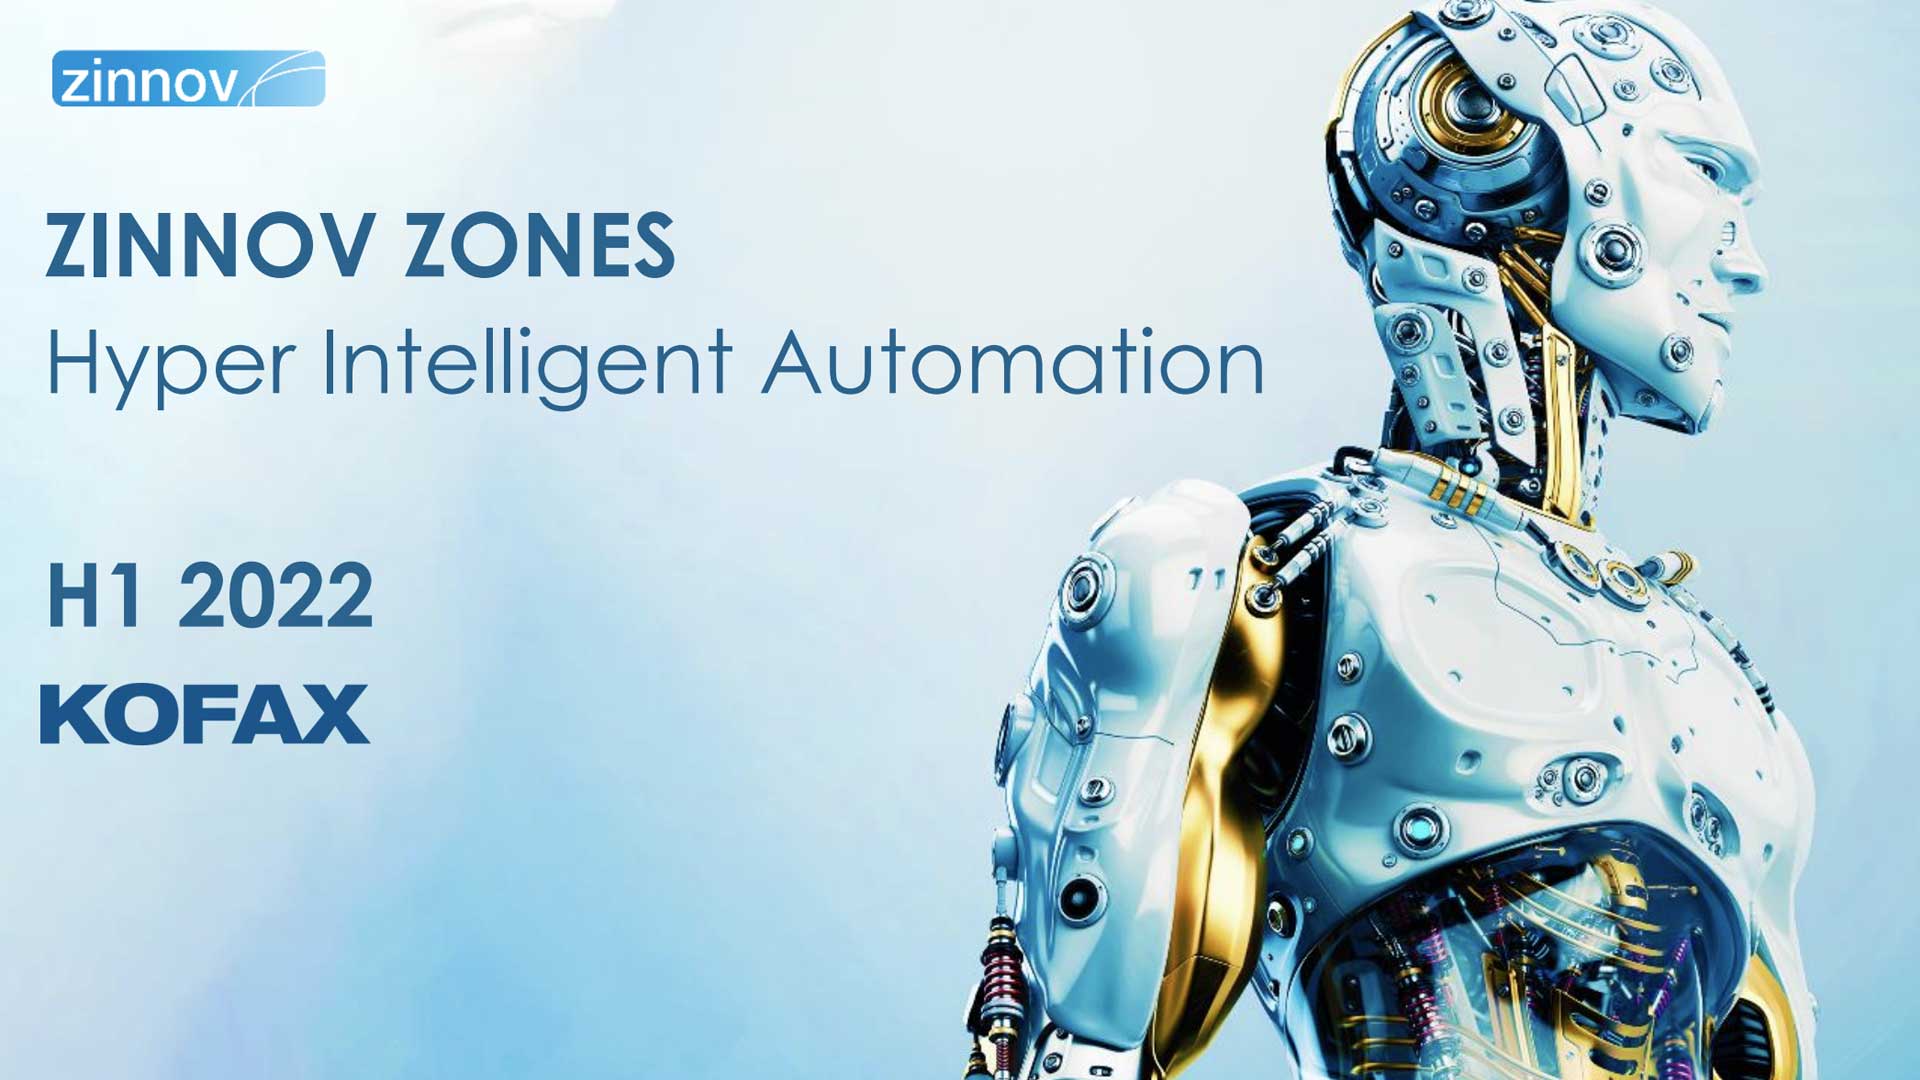 Zinnov Zones for Hyper Intelligent Automation – H1 2022